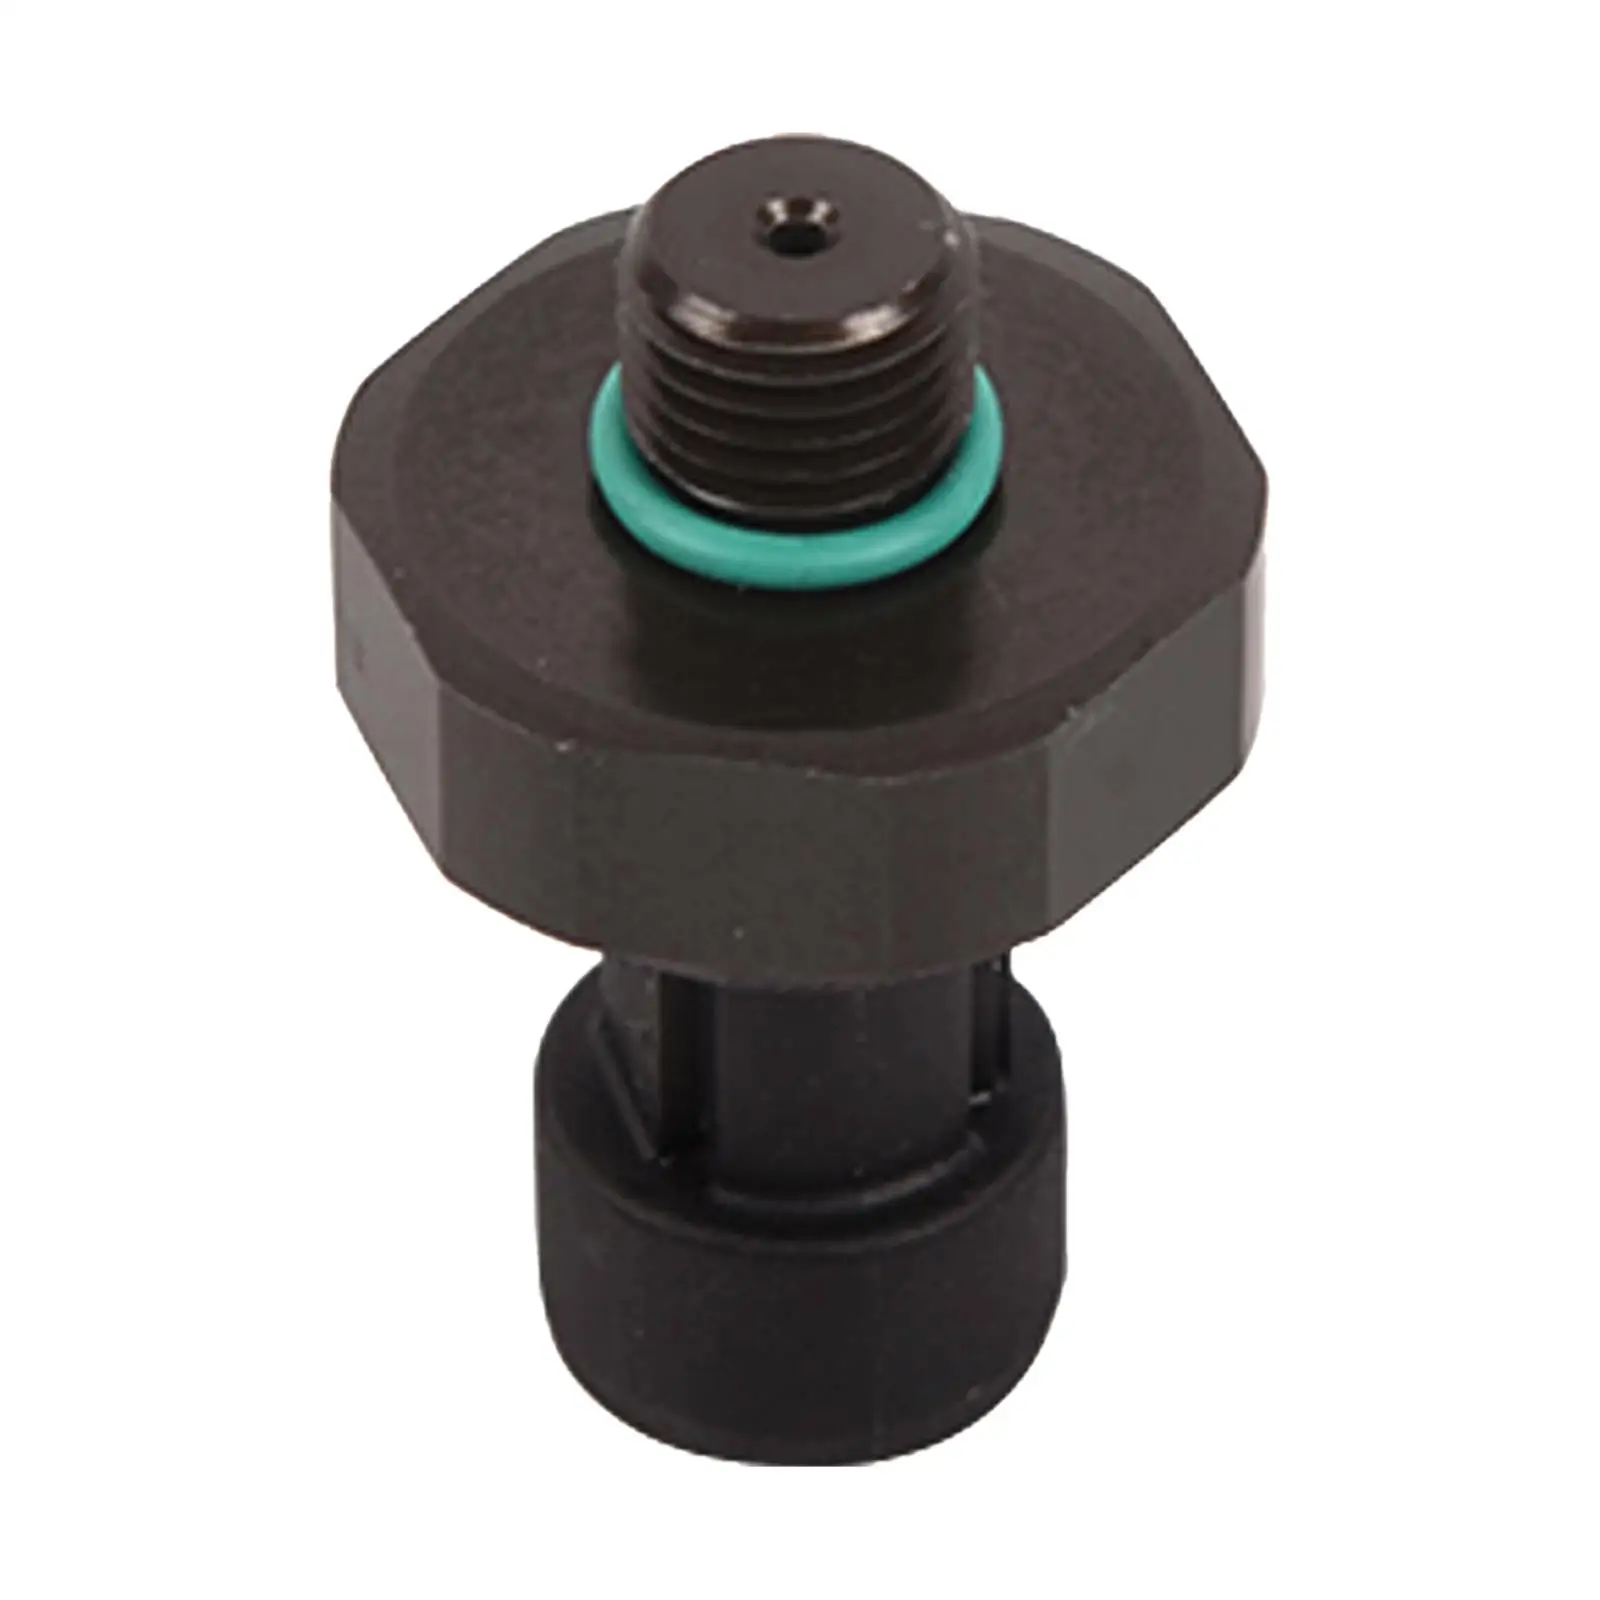 Oil Pressure Sensor Plastic Automobile Pressure Sensor for Bobcat Loader Skid Steer S450 T320 T870 T770 T750 T740 Replaces